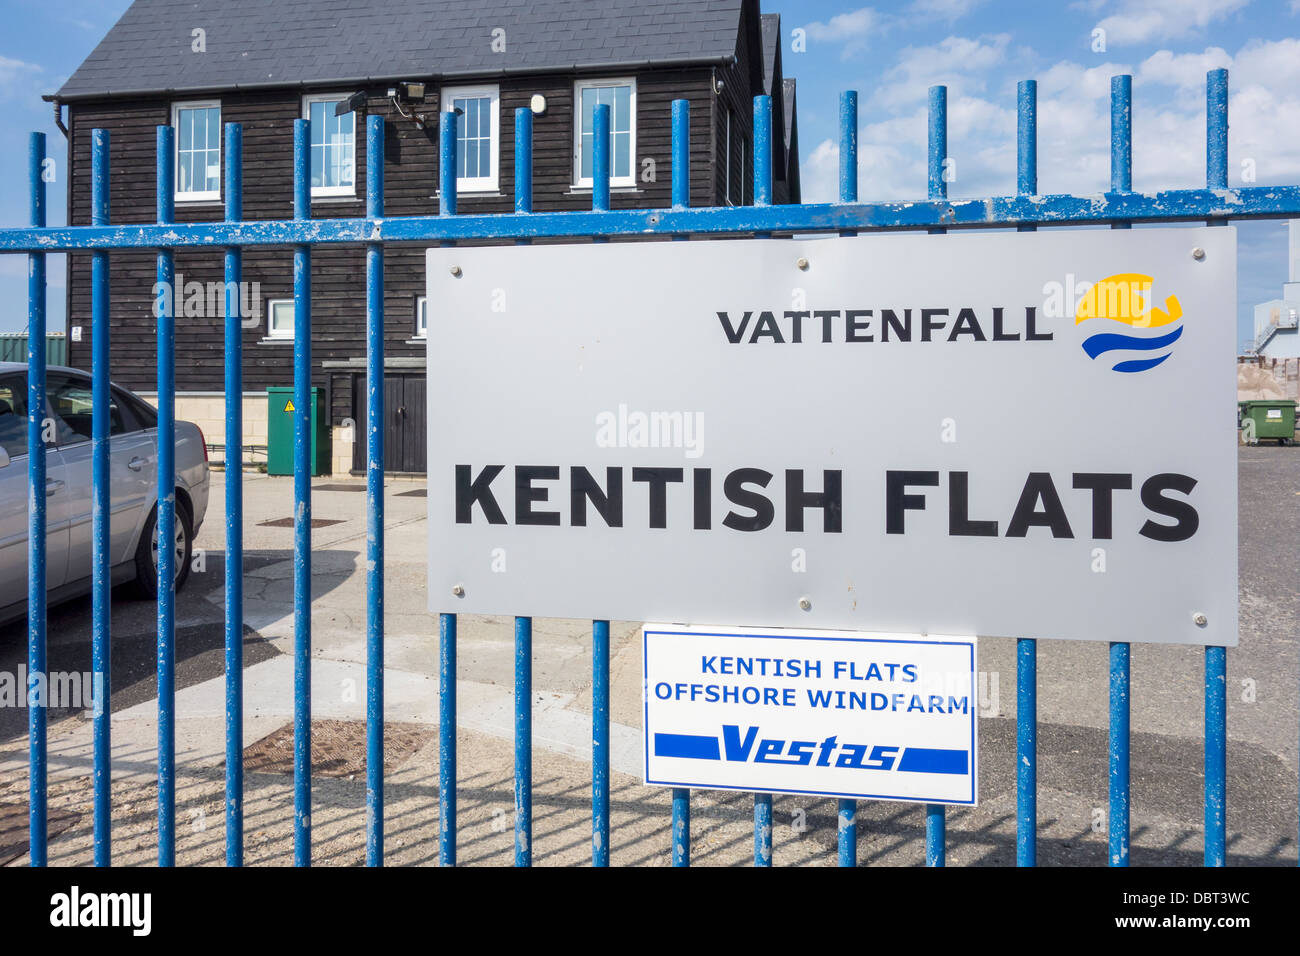 Vestas Offshore Wind Farm Service Kentish Flats Offshore Windfarm Stock Photo